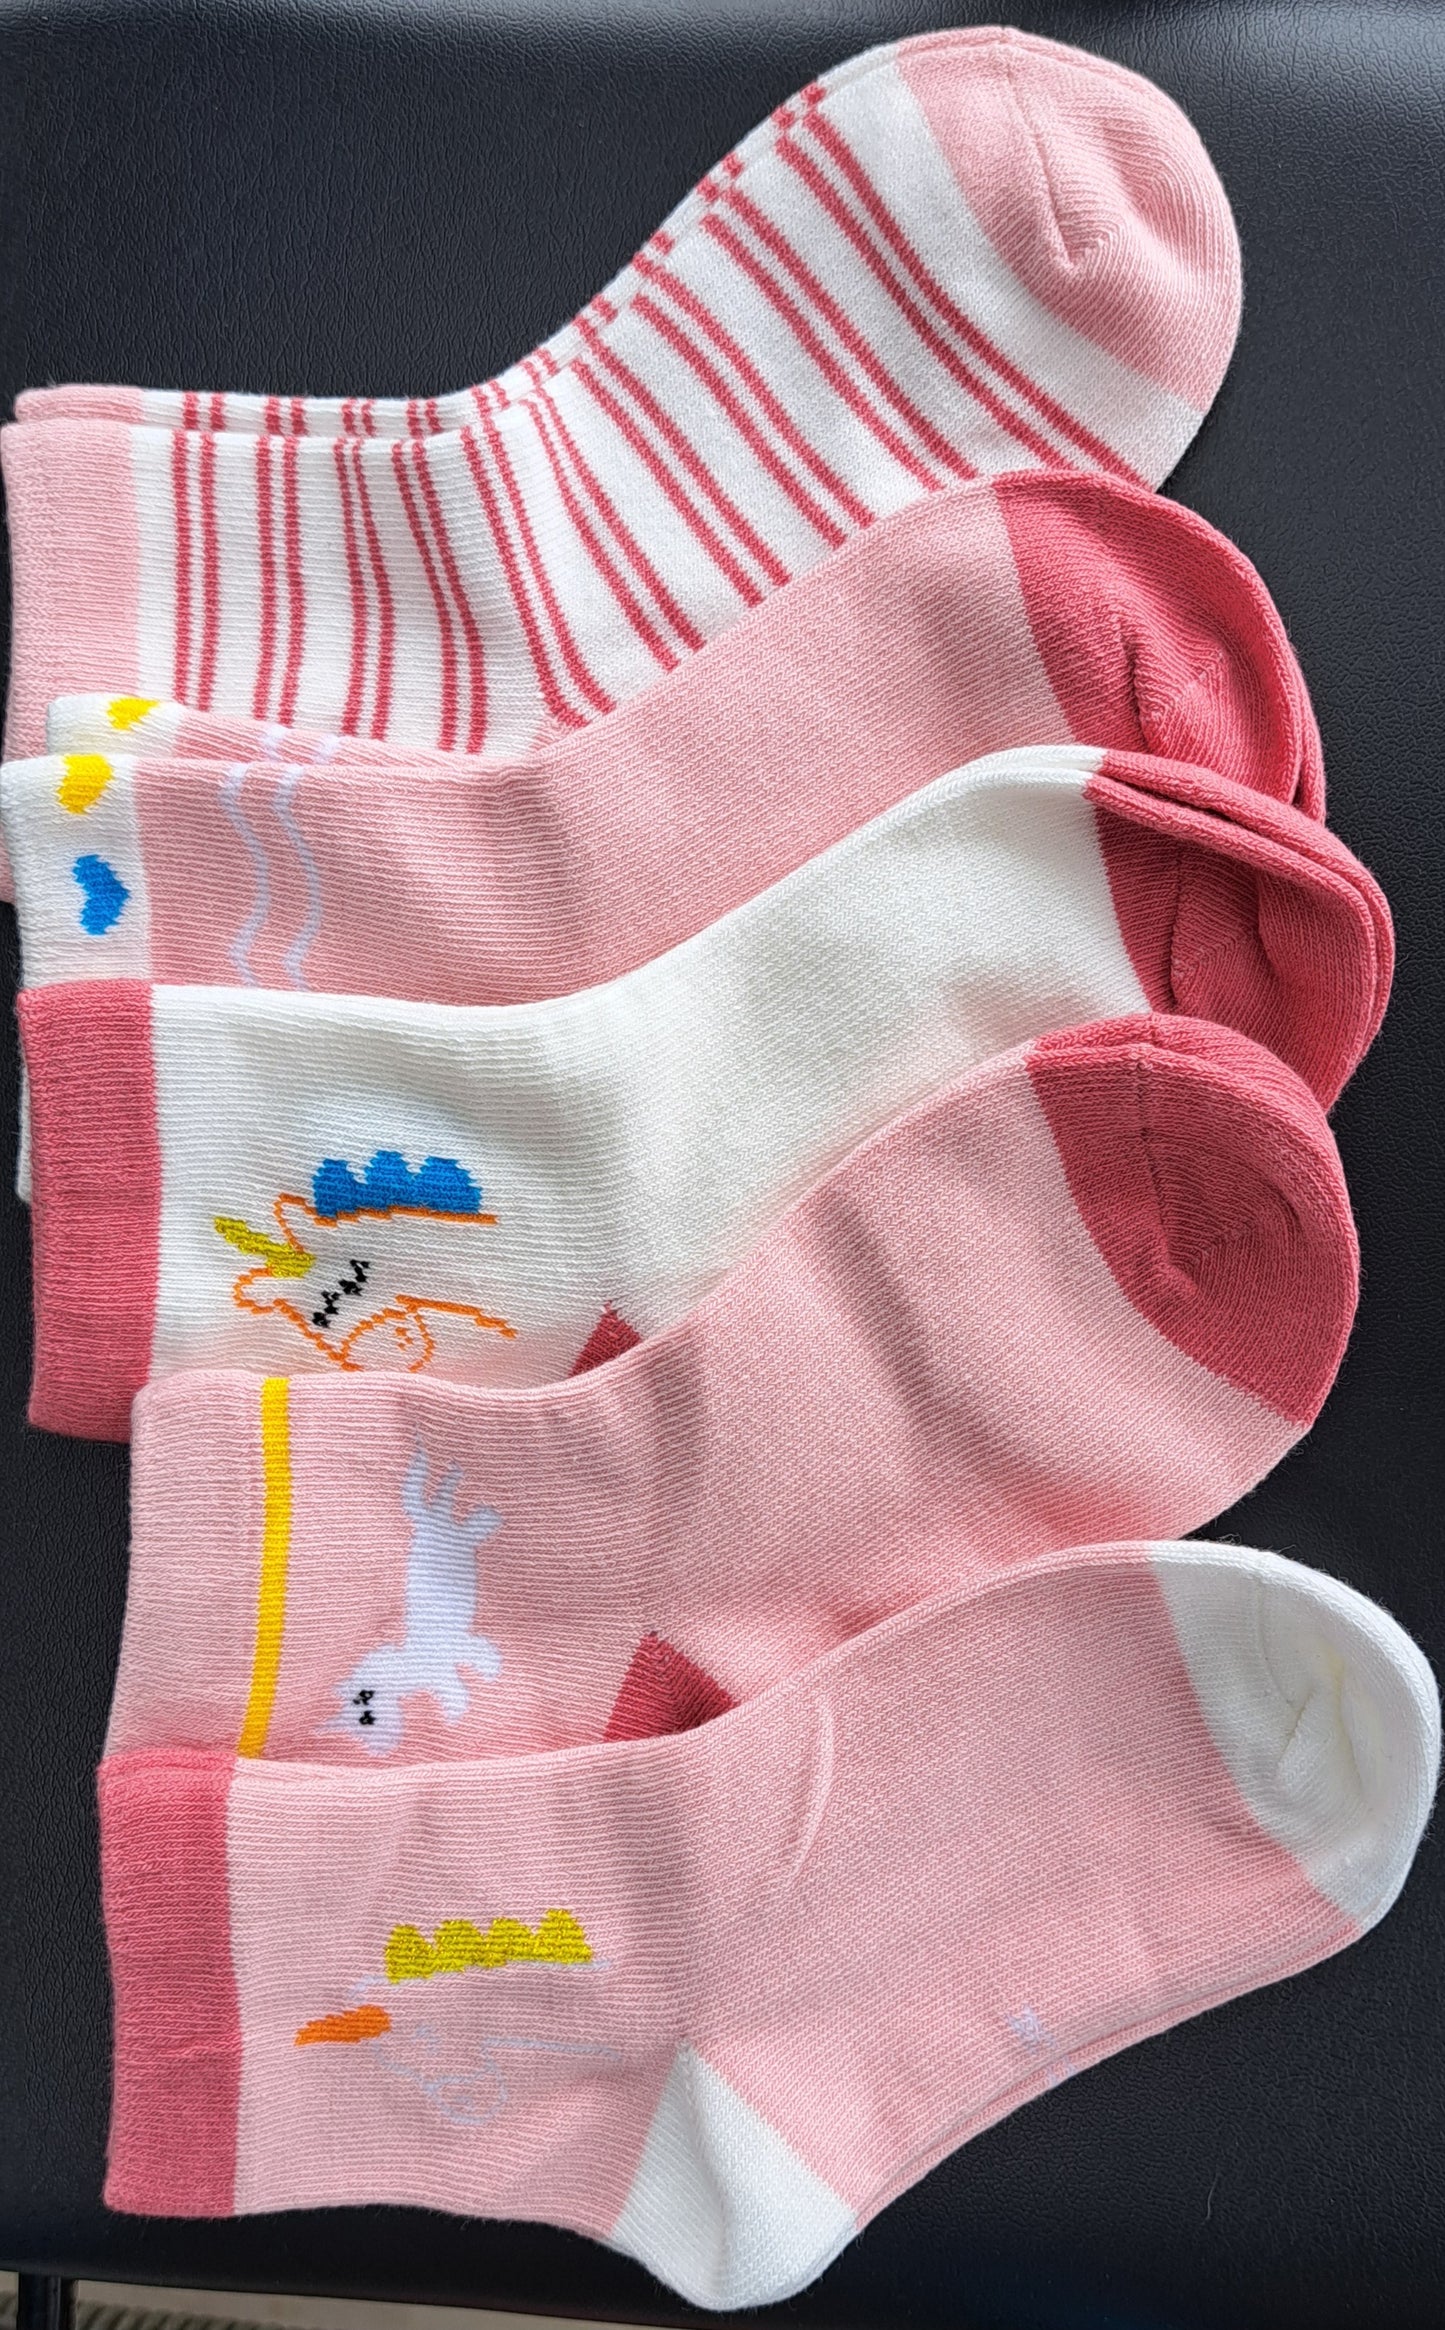 Kids/Toddlers Unicorn Socks - Pack of 5